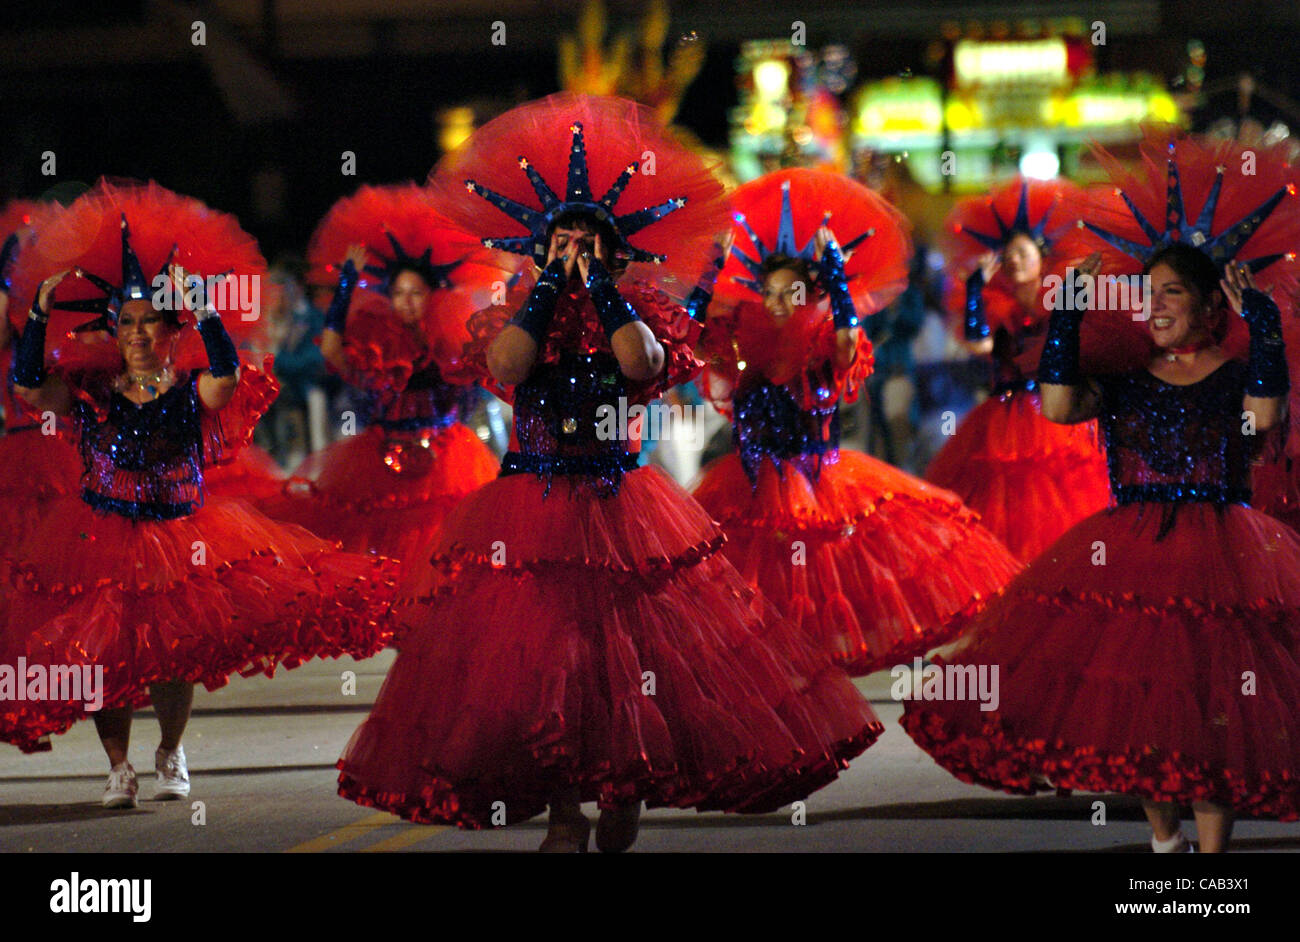 Fiesta flambeau parade hi-res stock photography and images - Alamy